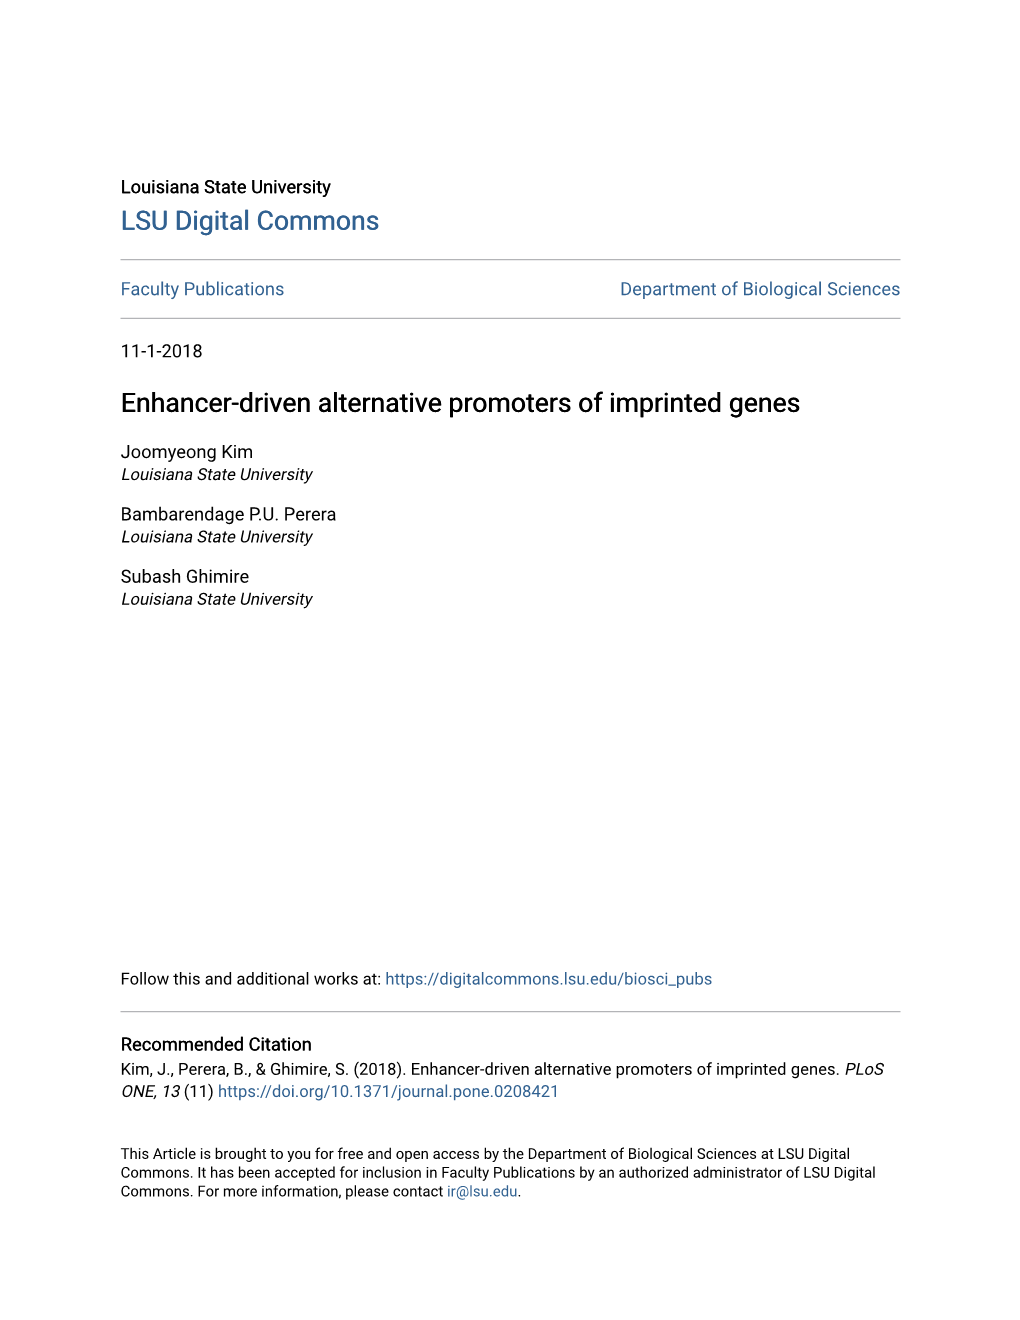 Enhancer-Driven Alternative Promoters of Imprinted Genes